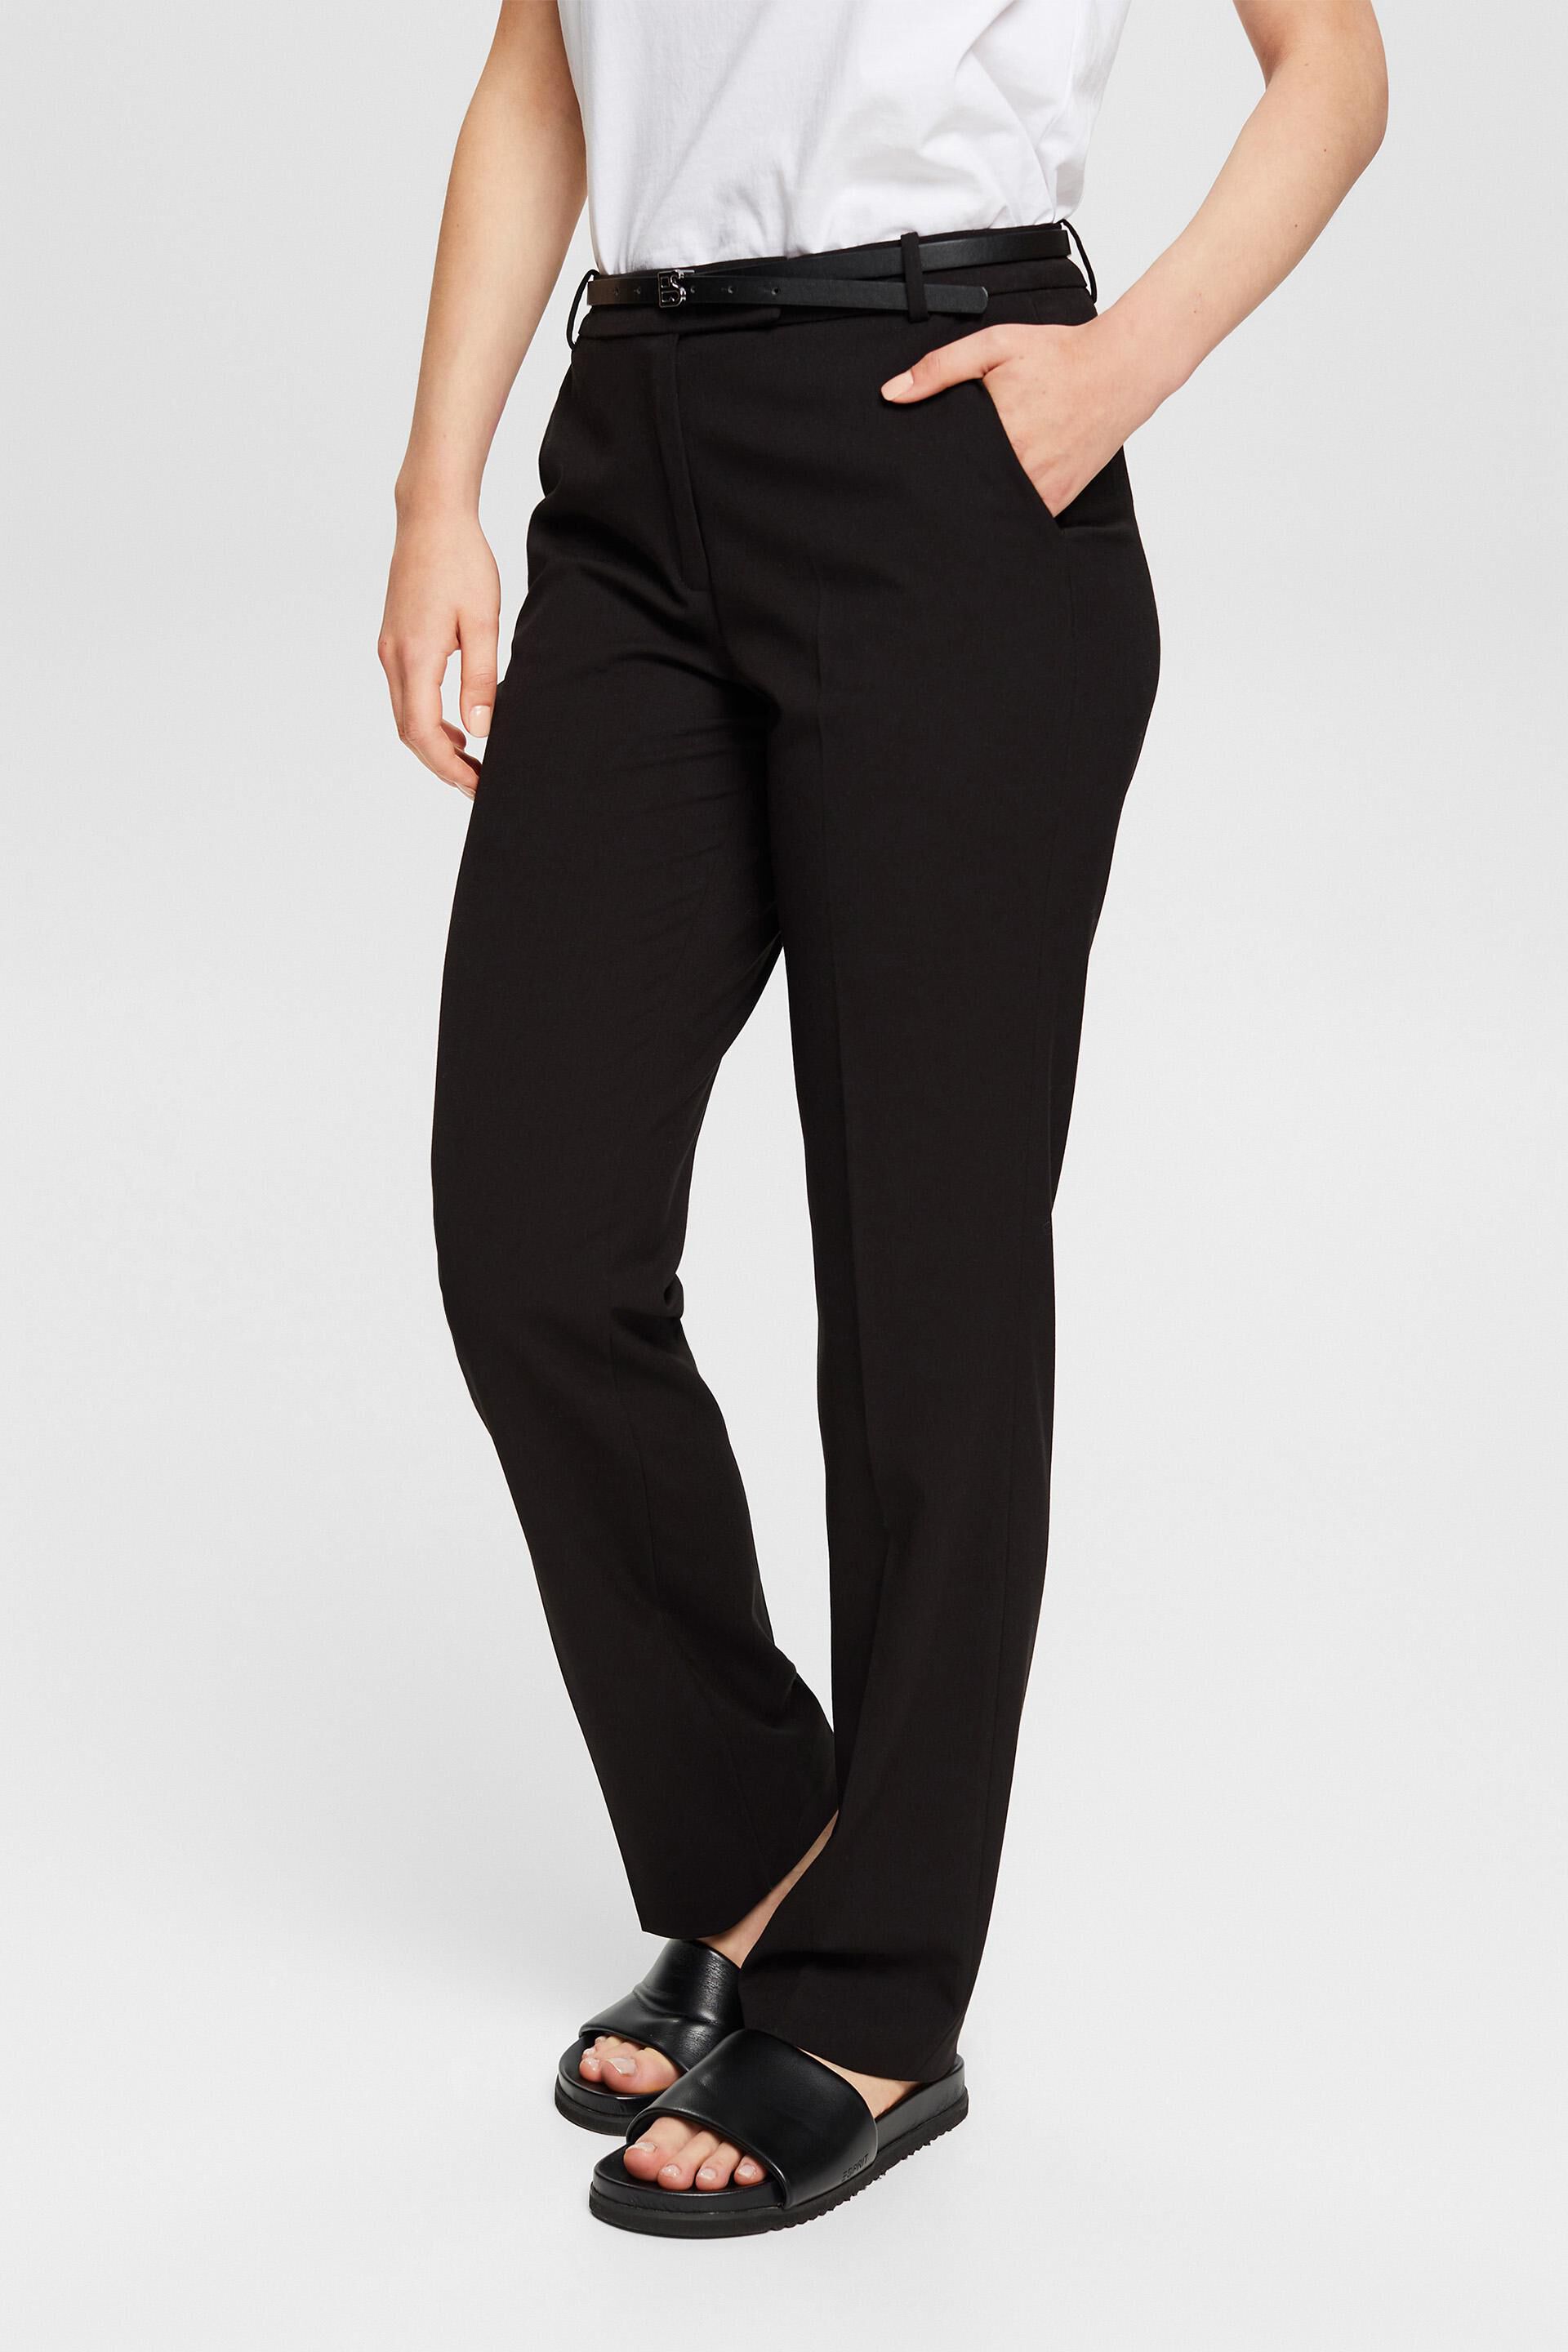 Esprit Damen PURE BUSINESS mix & match trousers